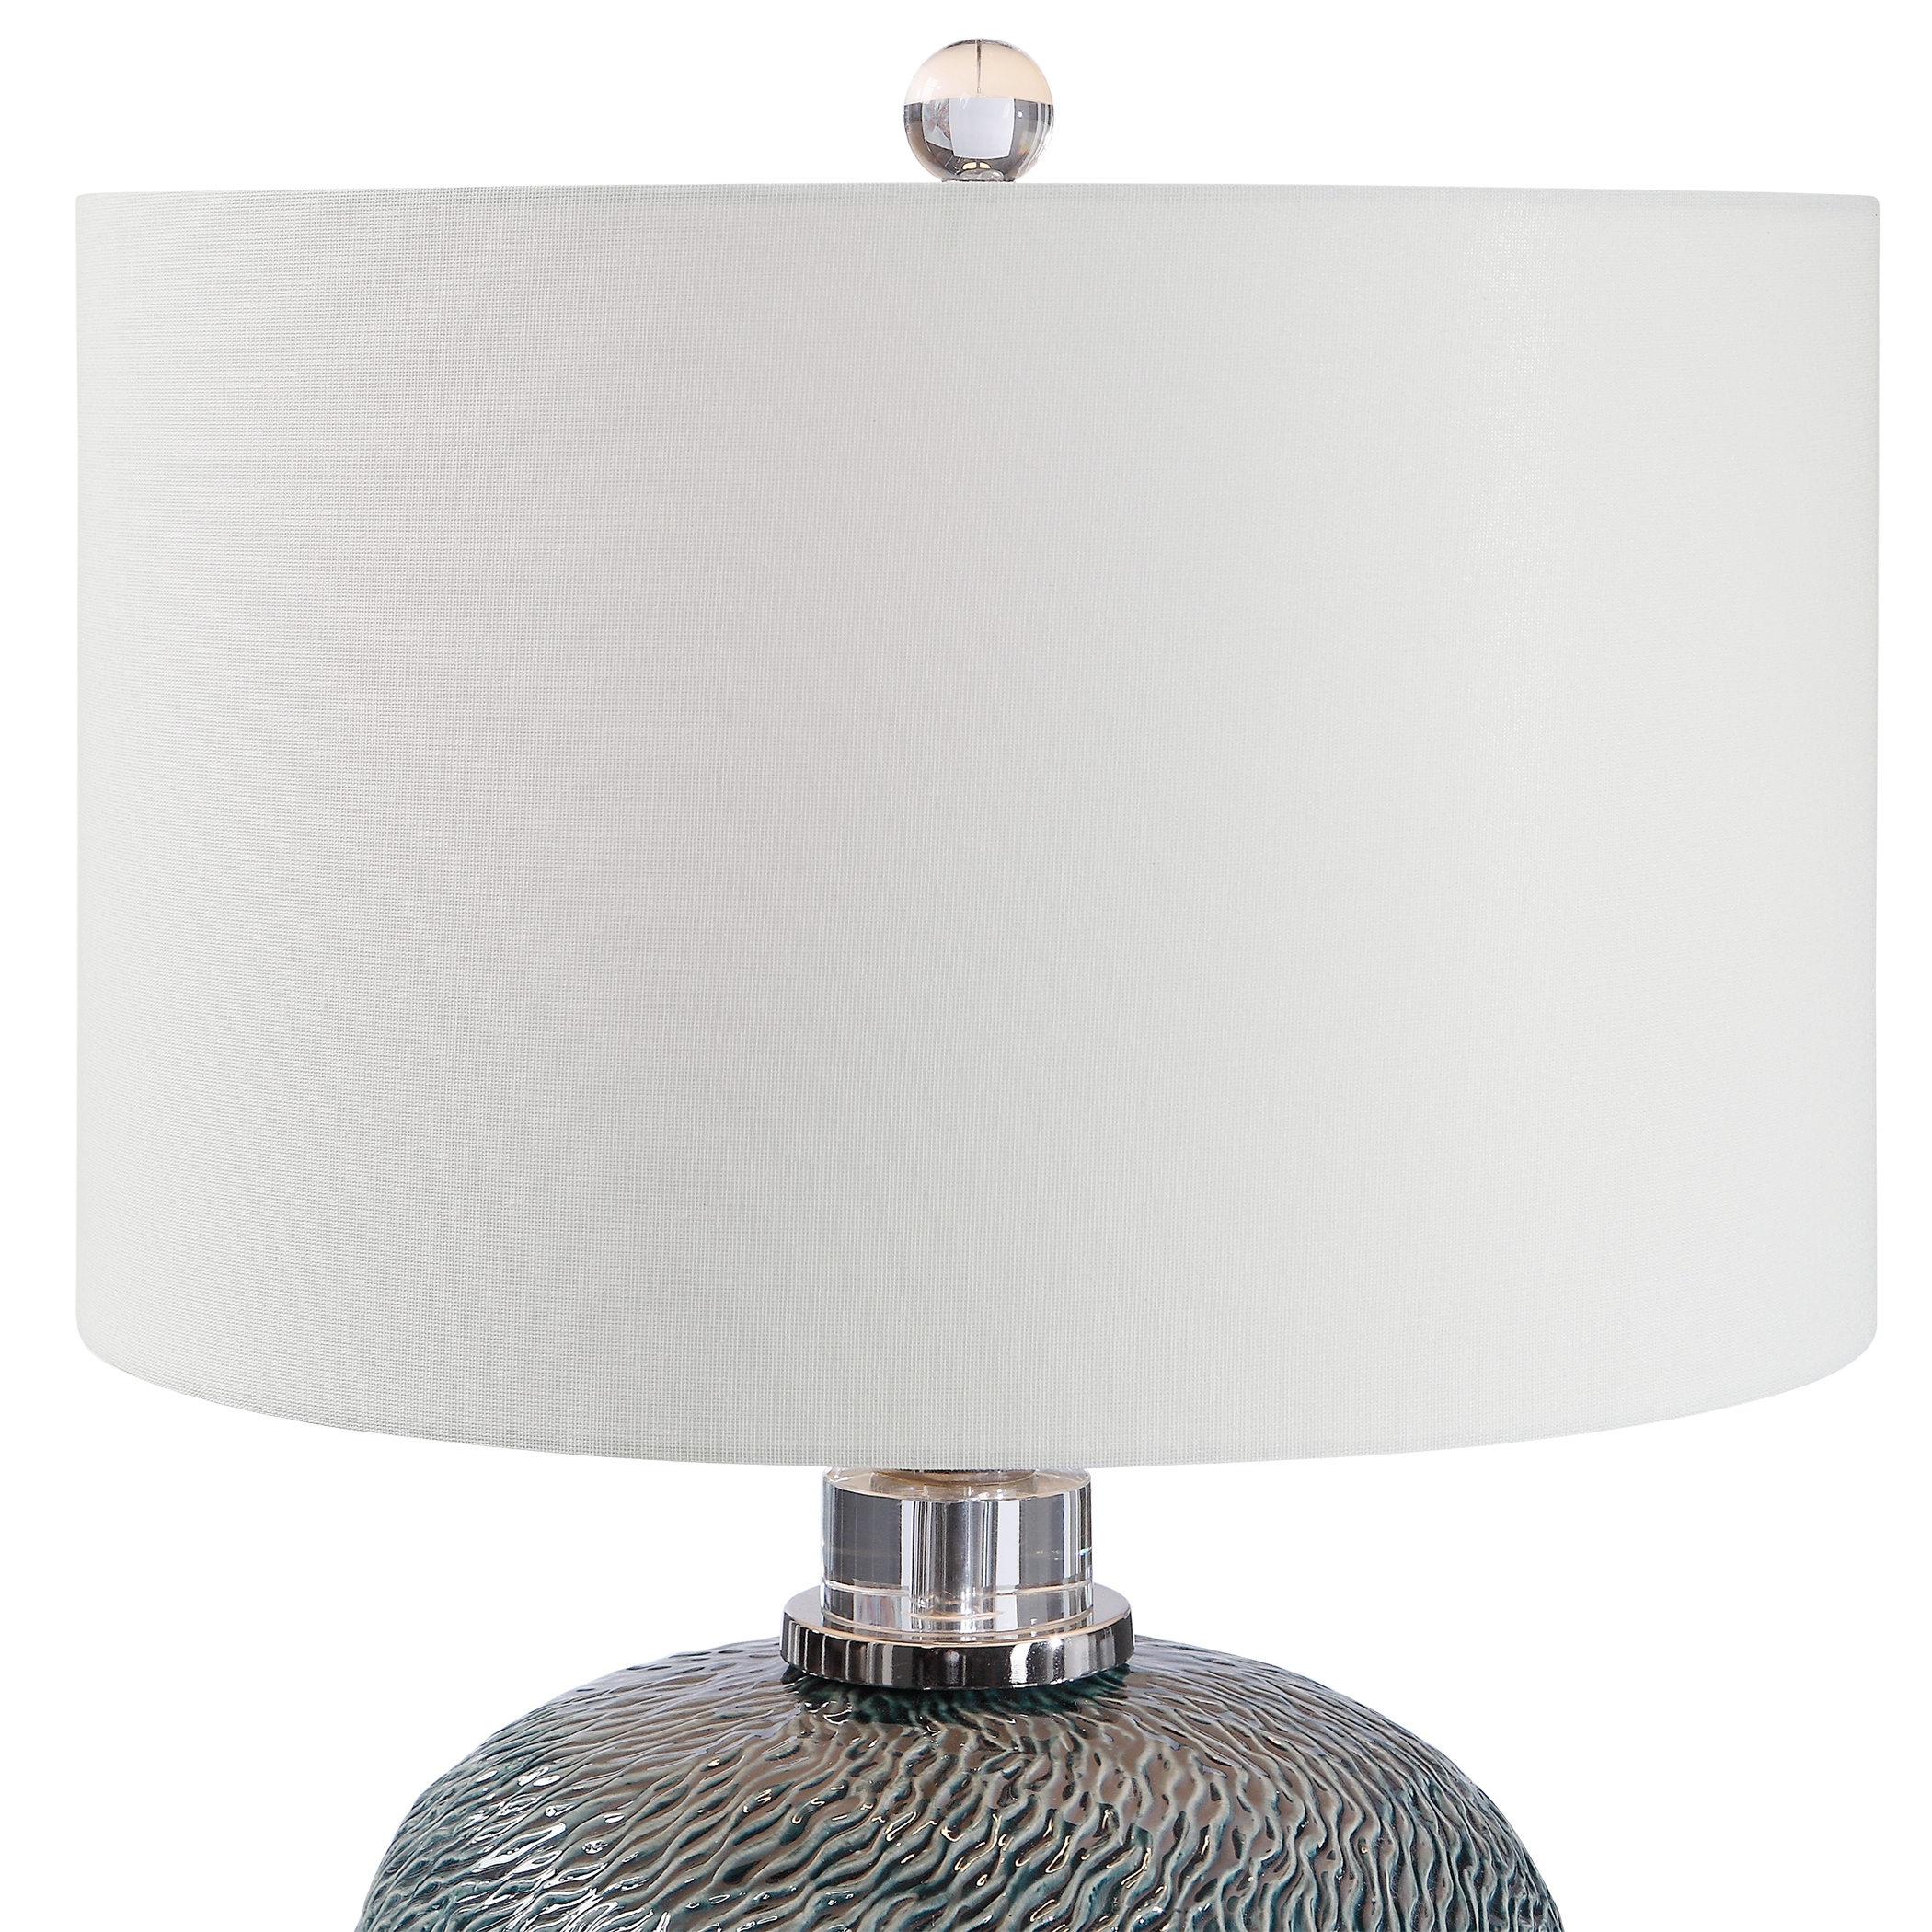 Almera Dark Teal Table Lamp - Image 5